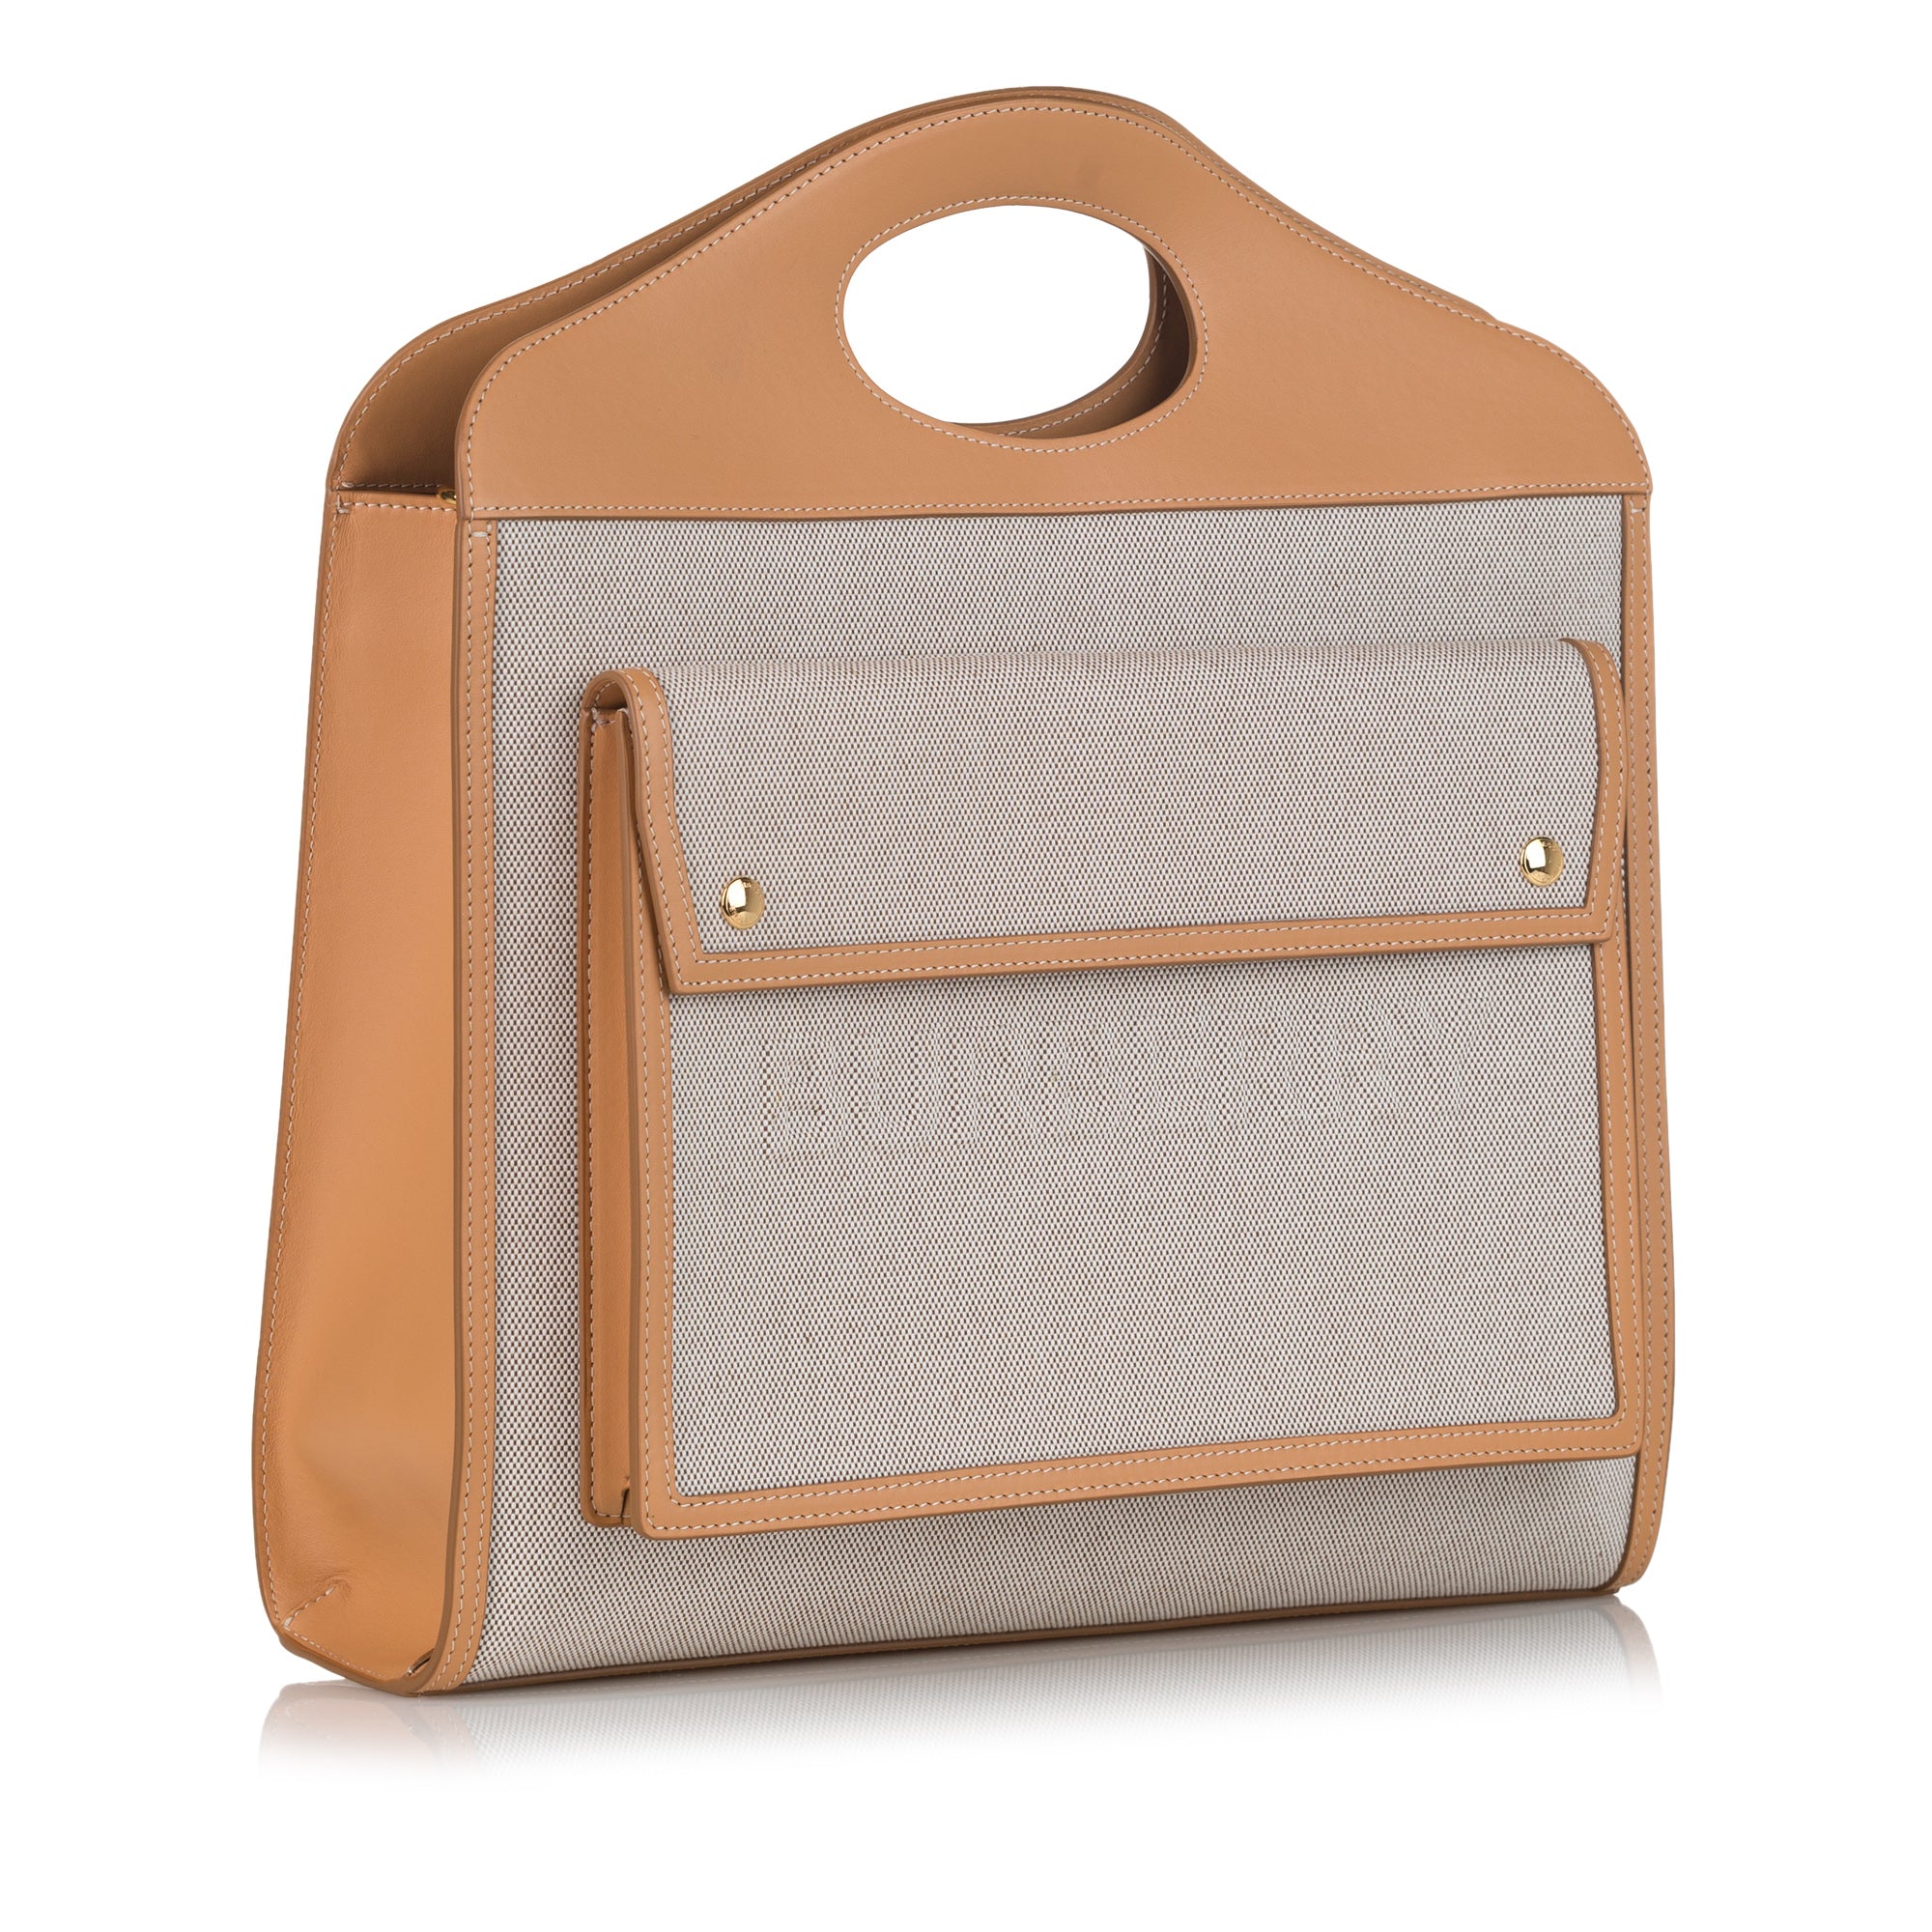 Burberry Mini Leather Pocket Tote Bag